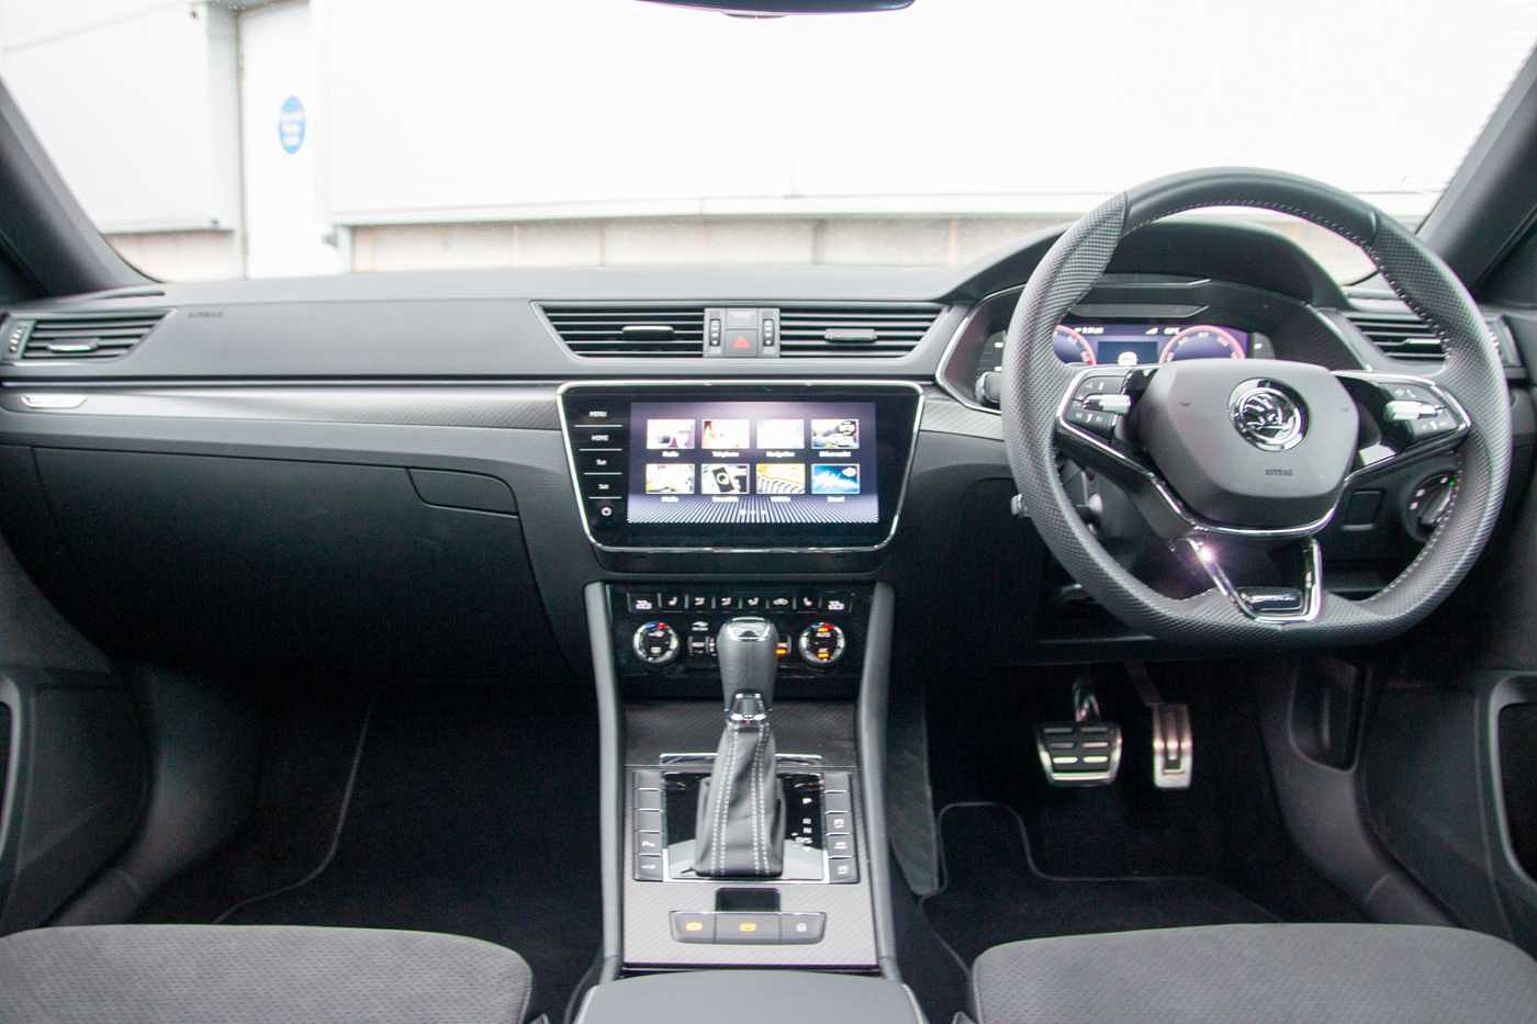 SKODA Superb 2.0 TSI (190ps) SportLine Plus DSG Hatch